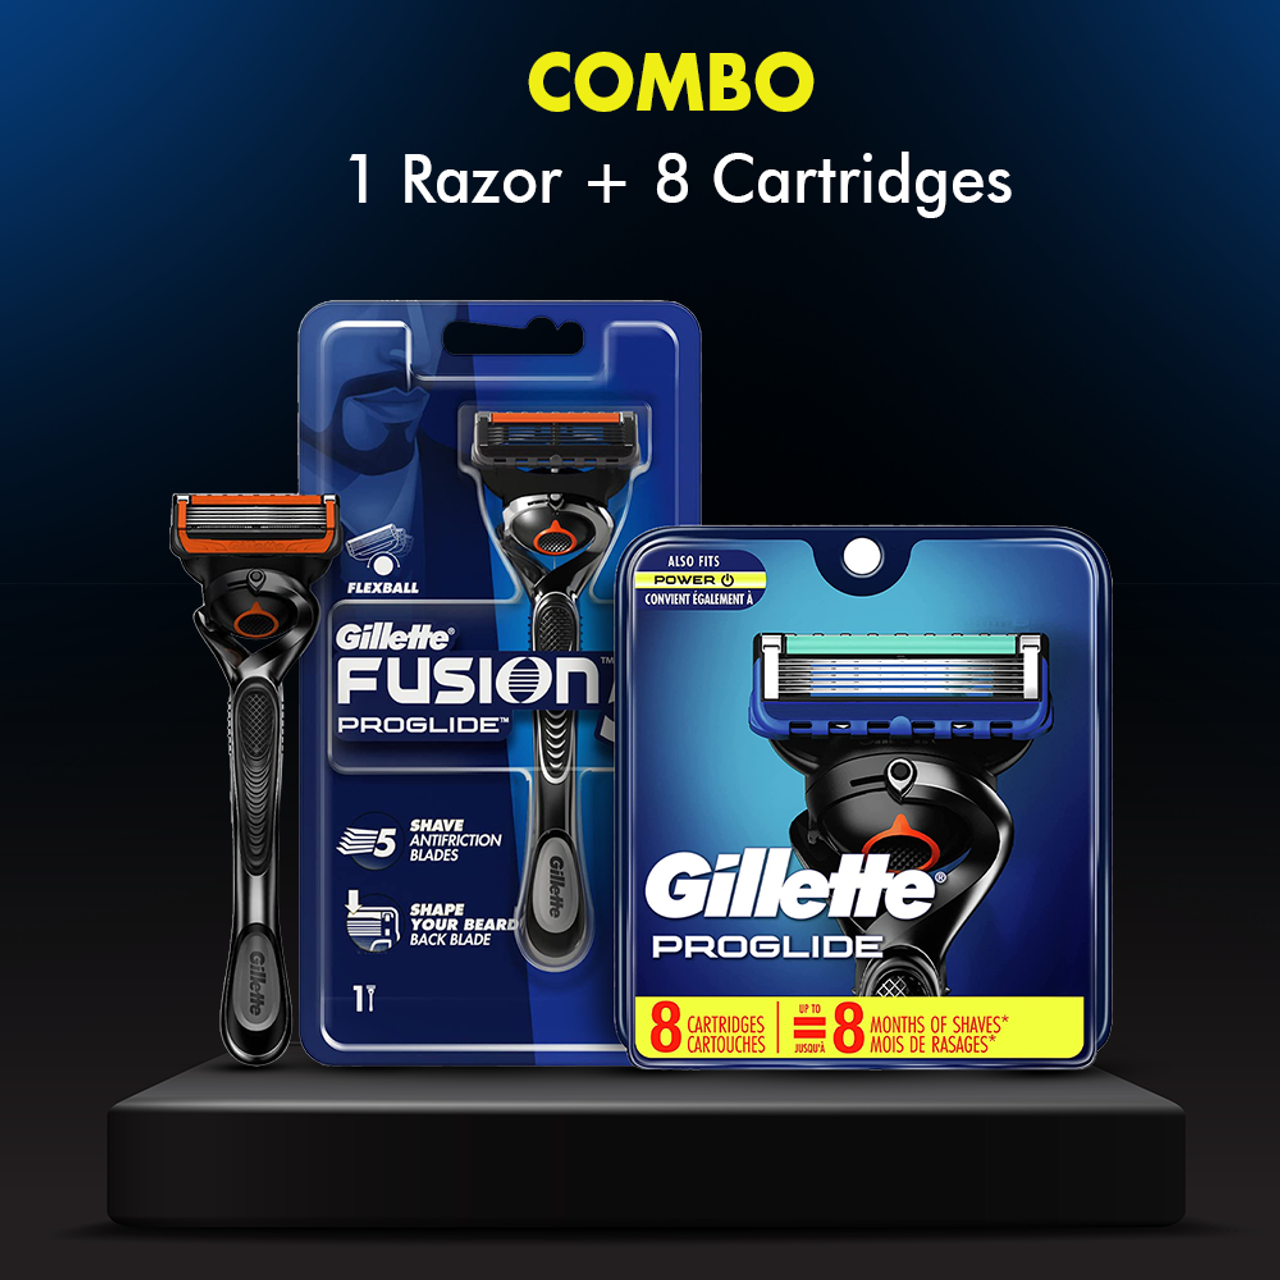 Gillette Mach3 Turbo Men’s Razor with Flexball Technology | Pack of 1 Razor